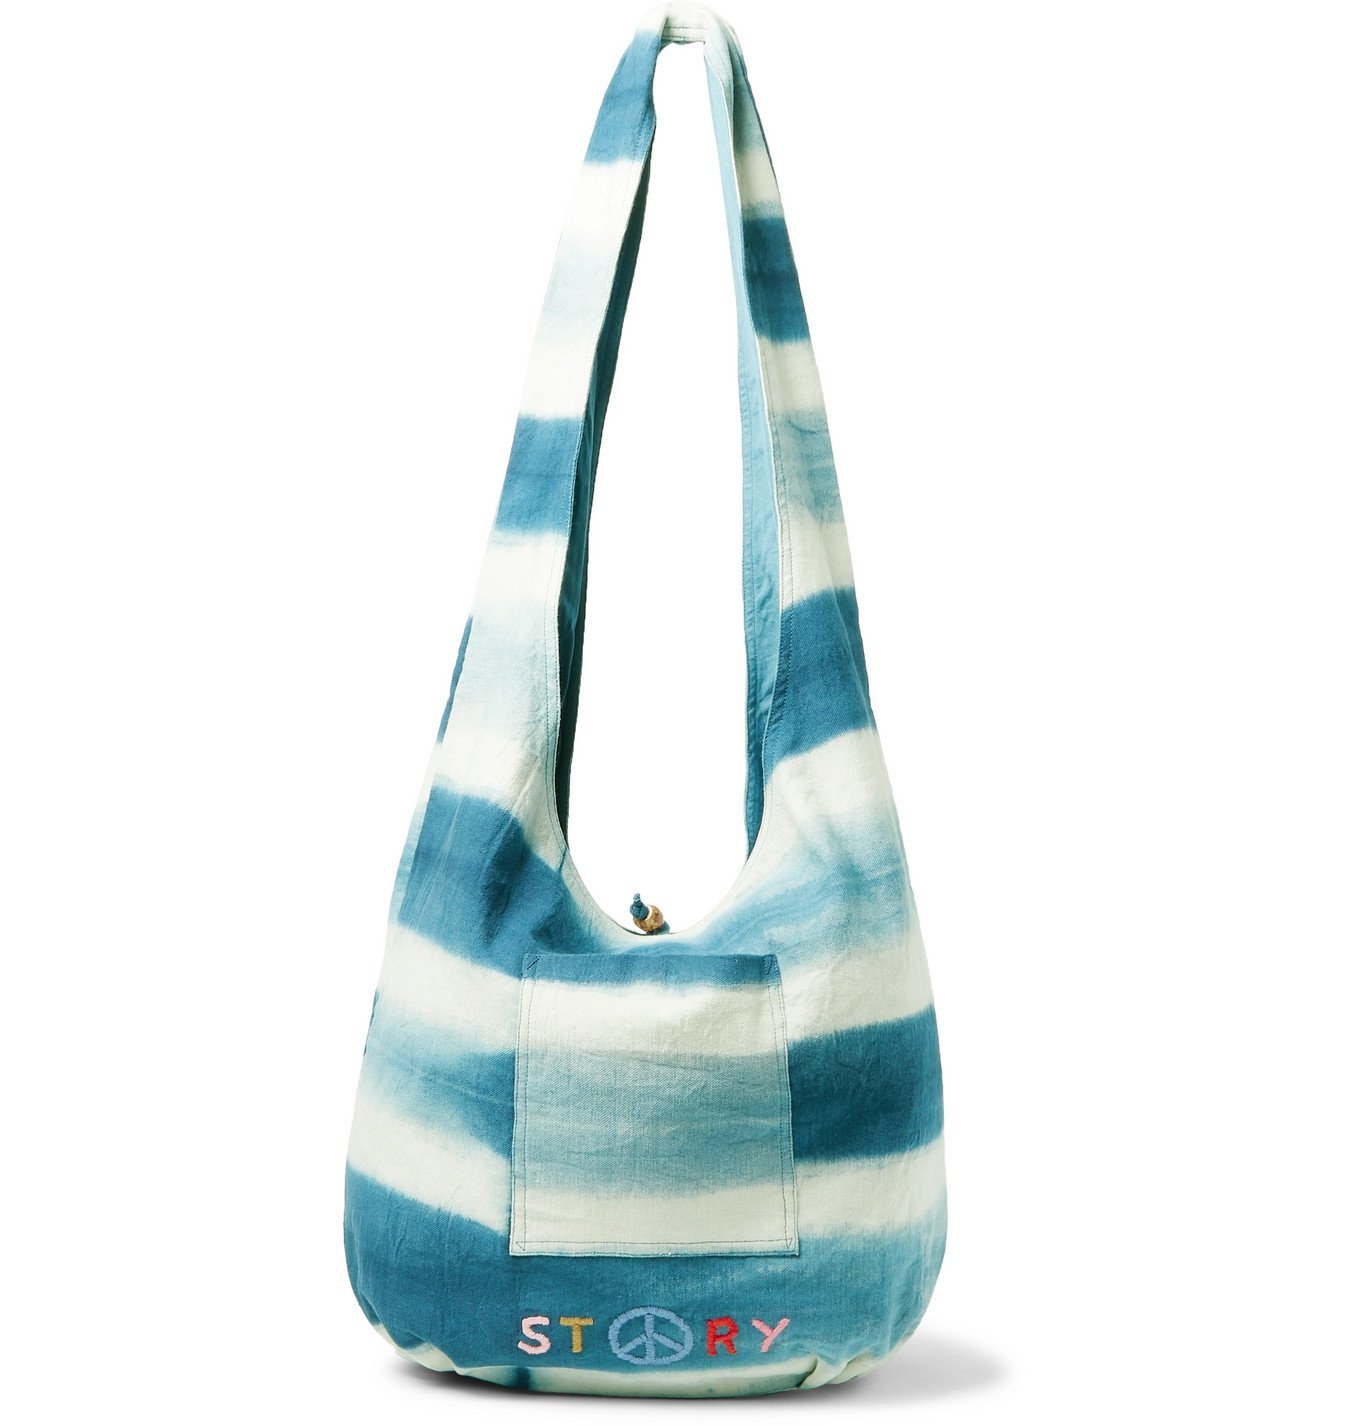 Organic cotton tote bag dyed with natural indigo